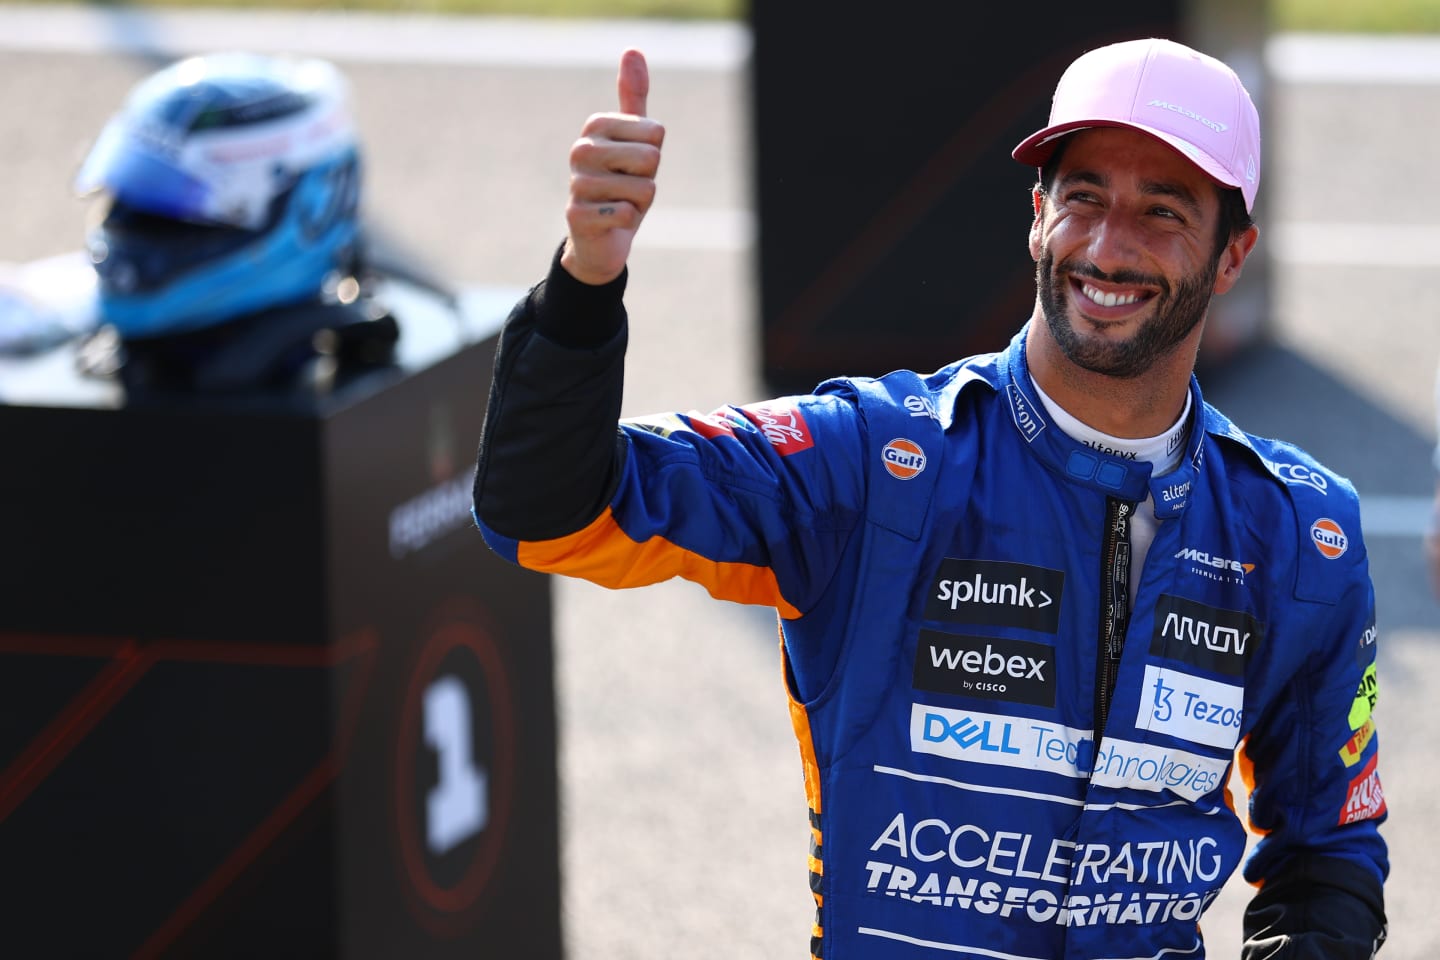 MONZA, ITALY - SEPTEMBER 11: Third place finisher Daniel Ricciardo of Australia and McLaren F1